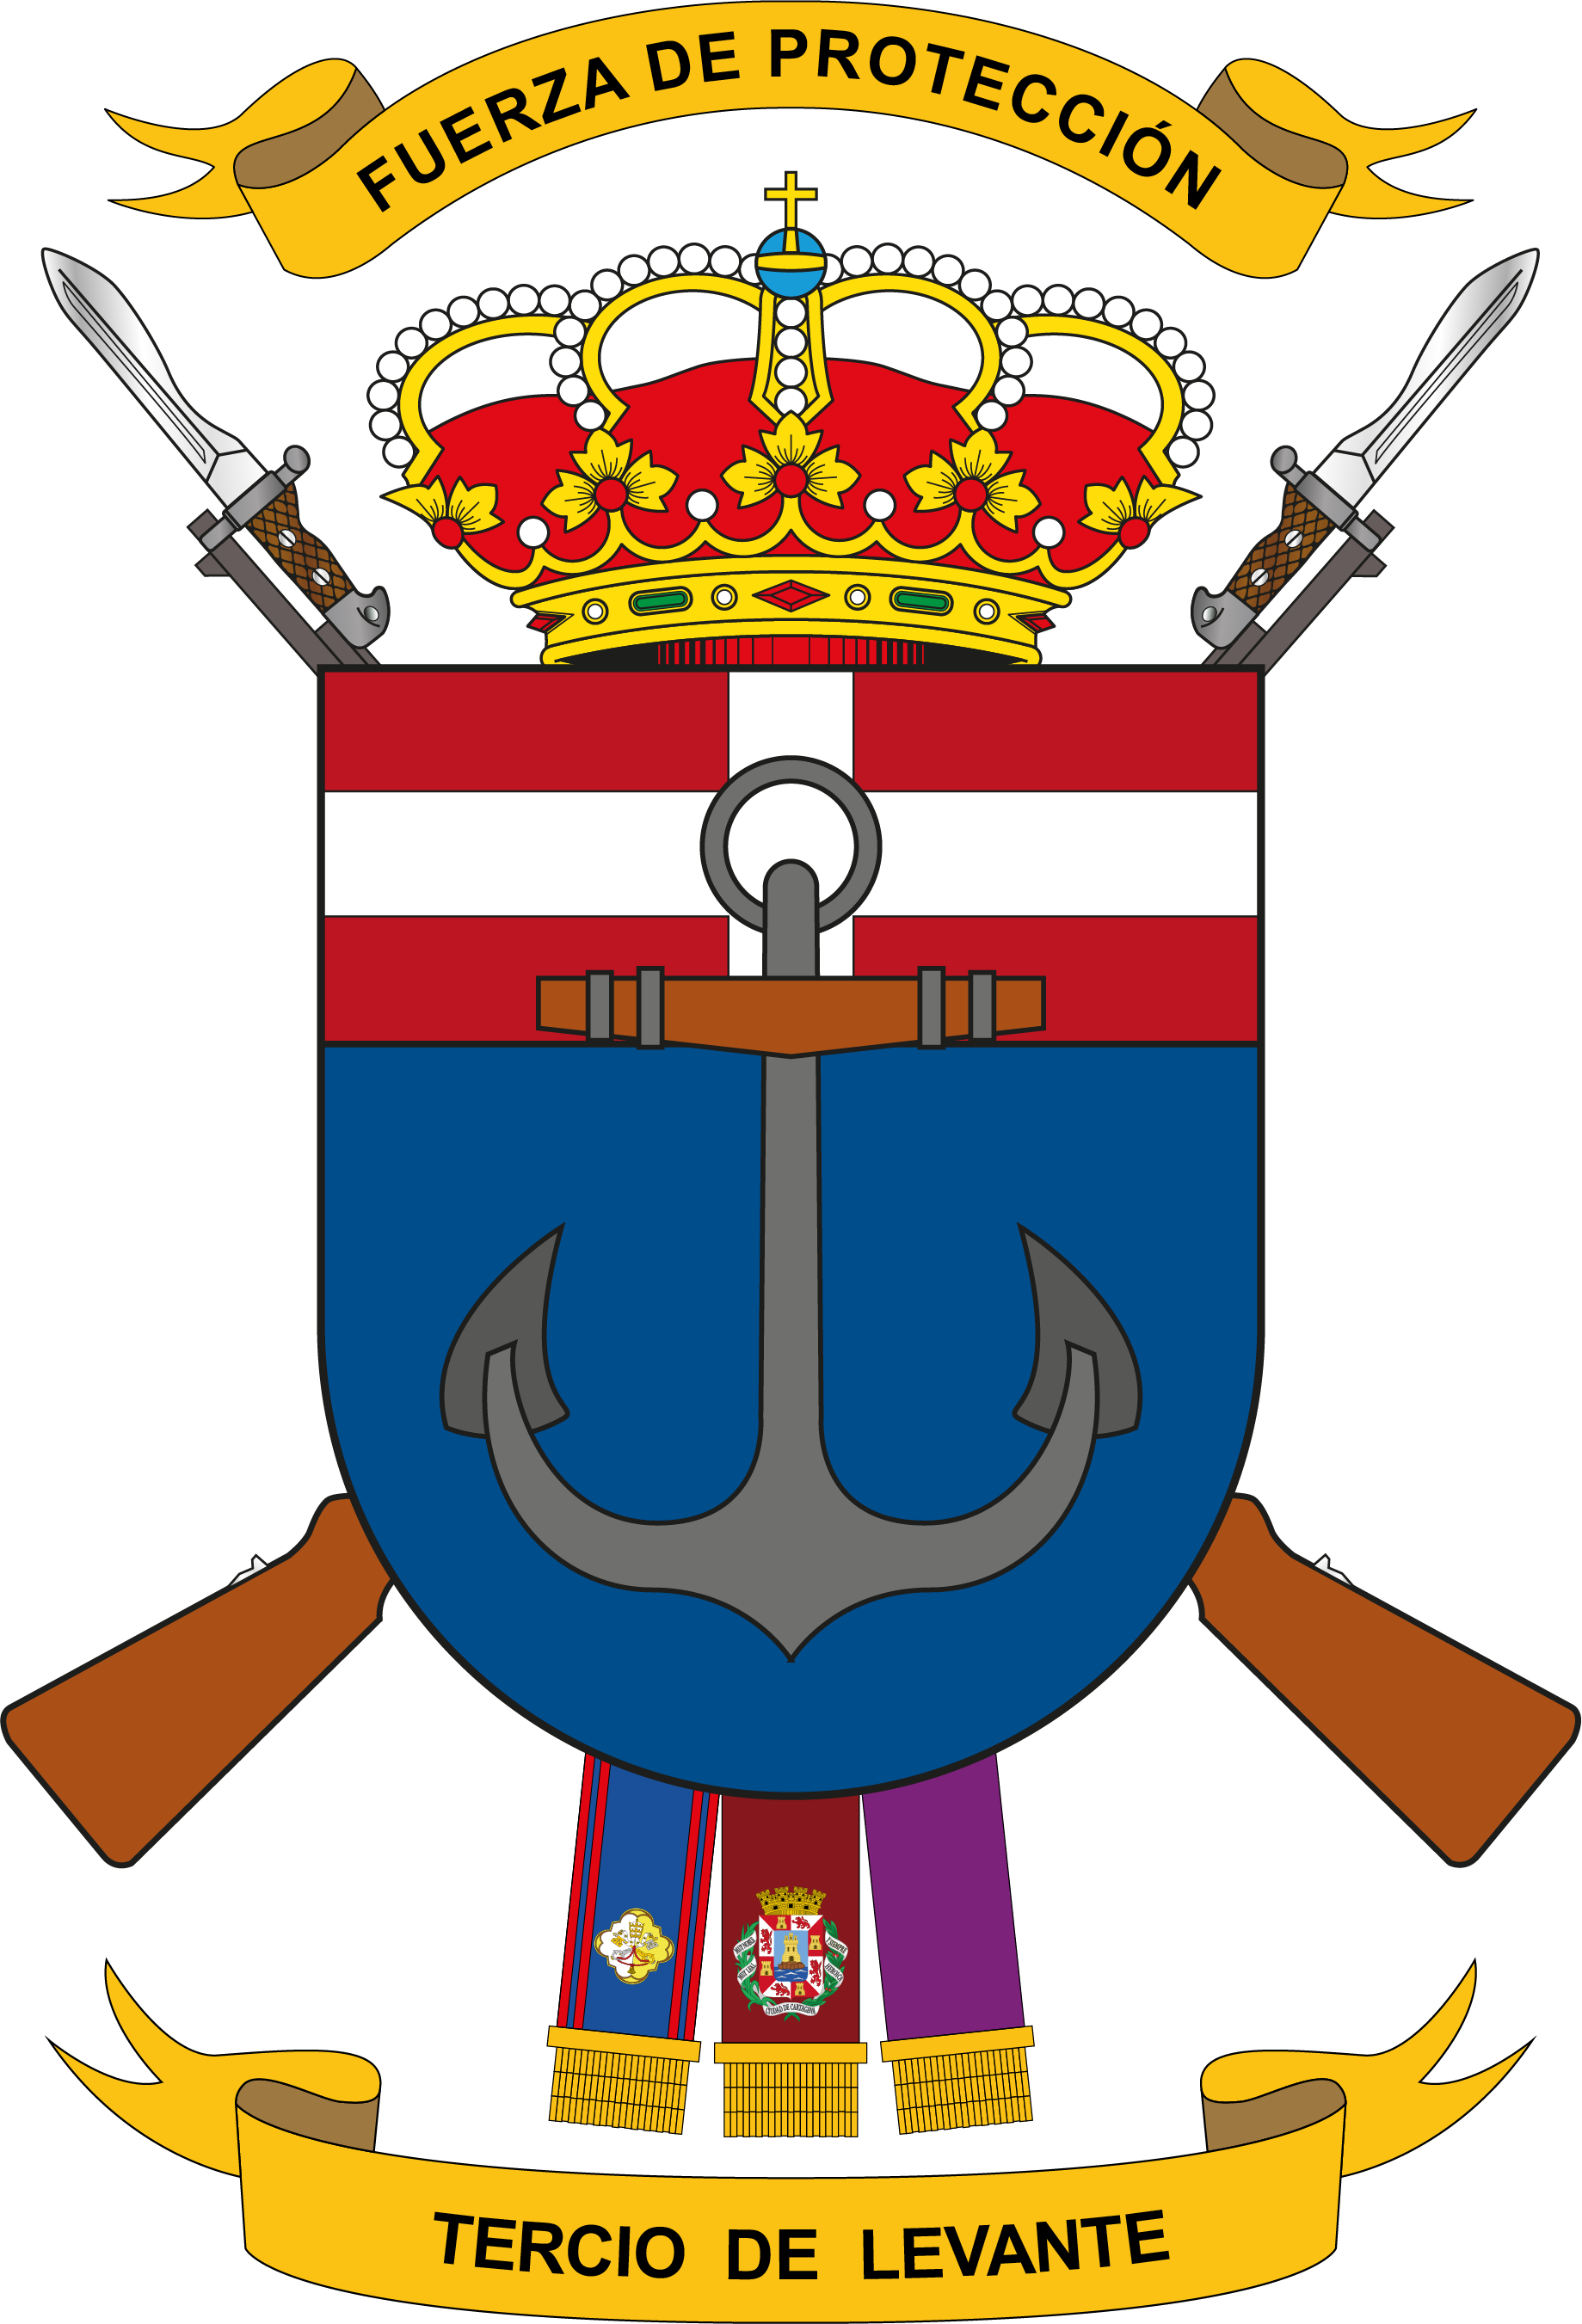 Eastern Regiment (TERLEV)
